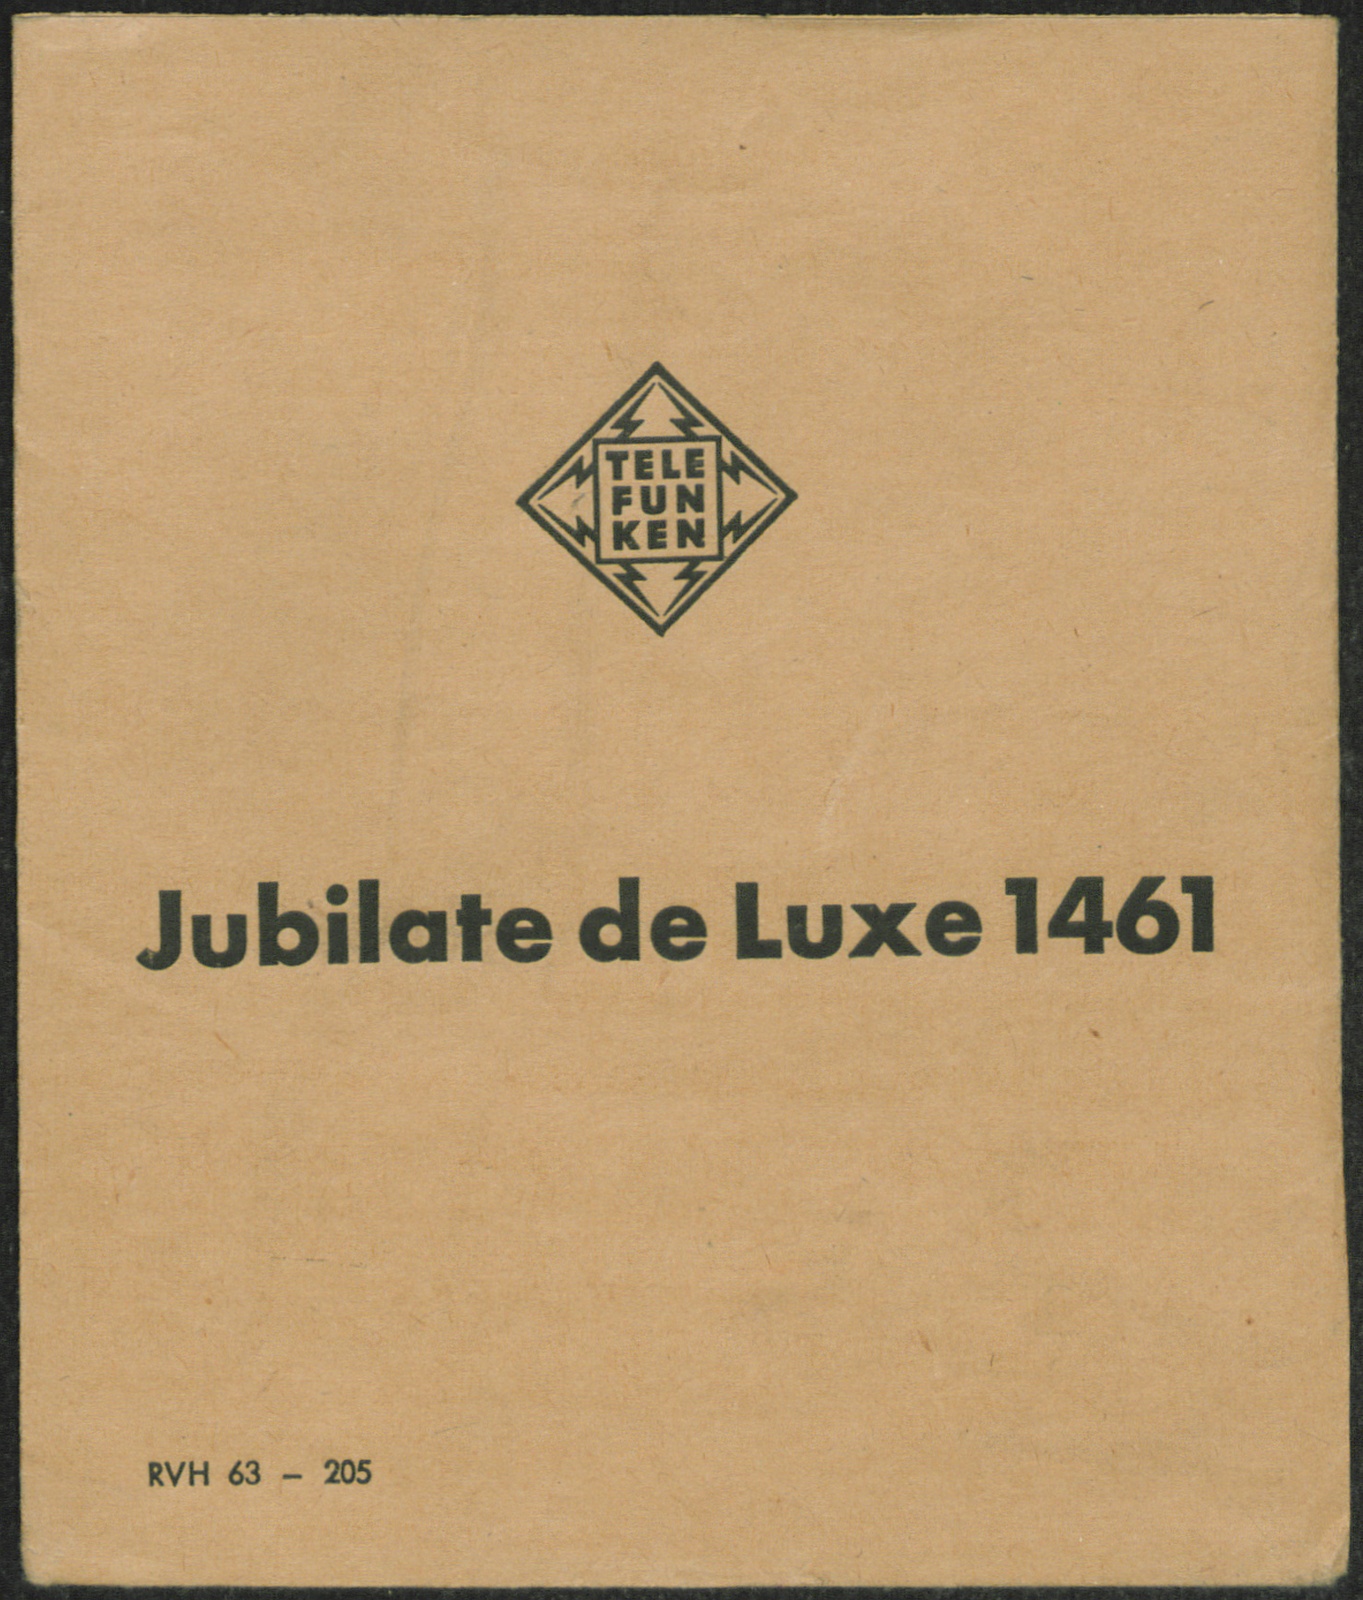 Schaltbild: Jubilate de Luxe 1461 (Stiftung Deutsches Technikmuseum Berlin CC0)